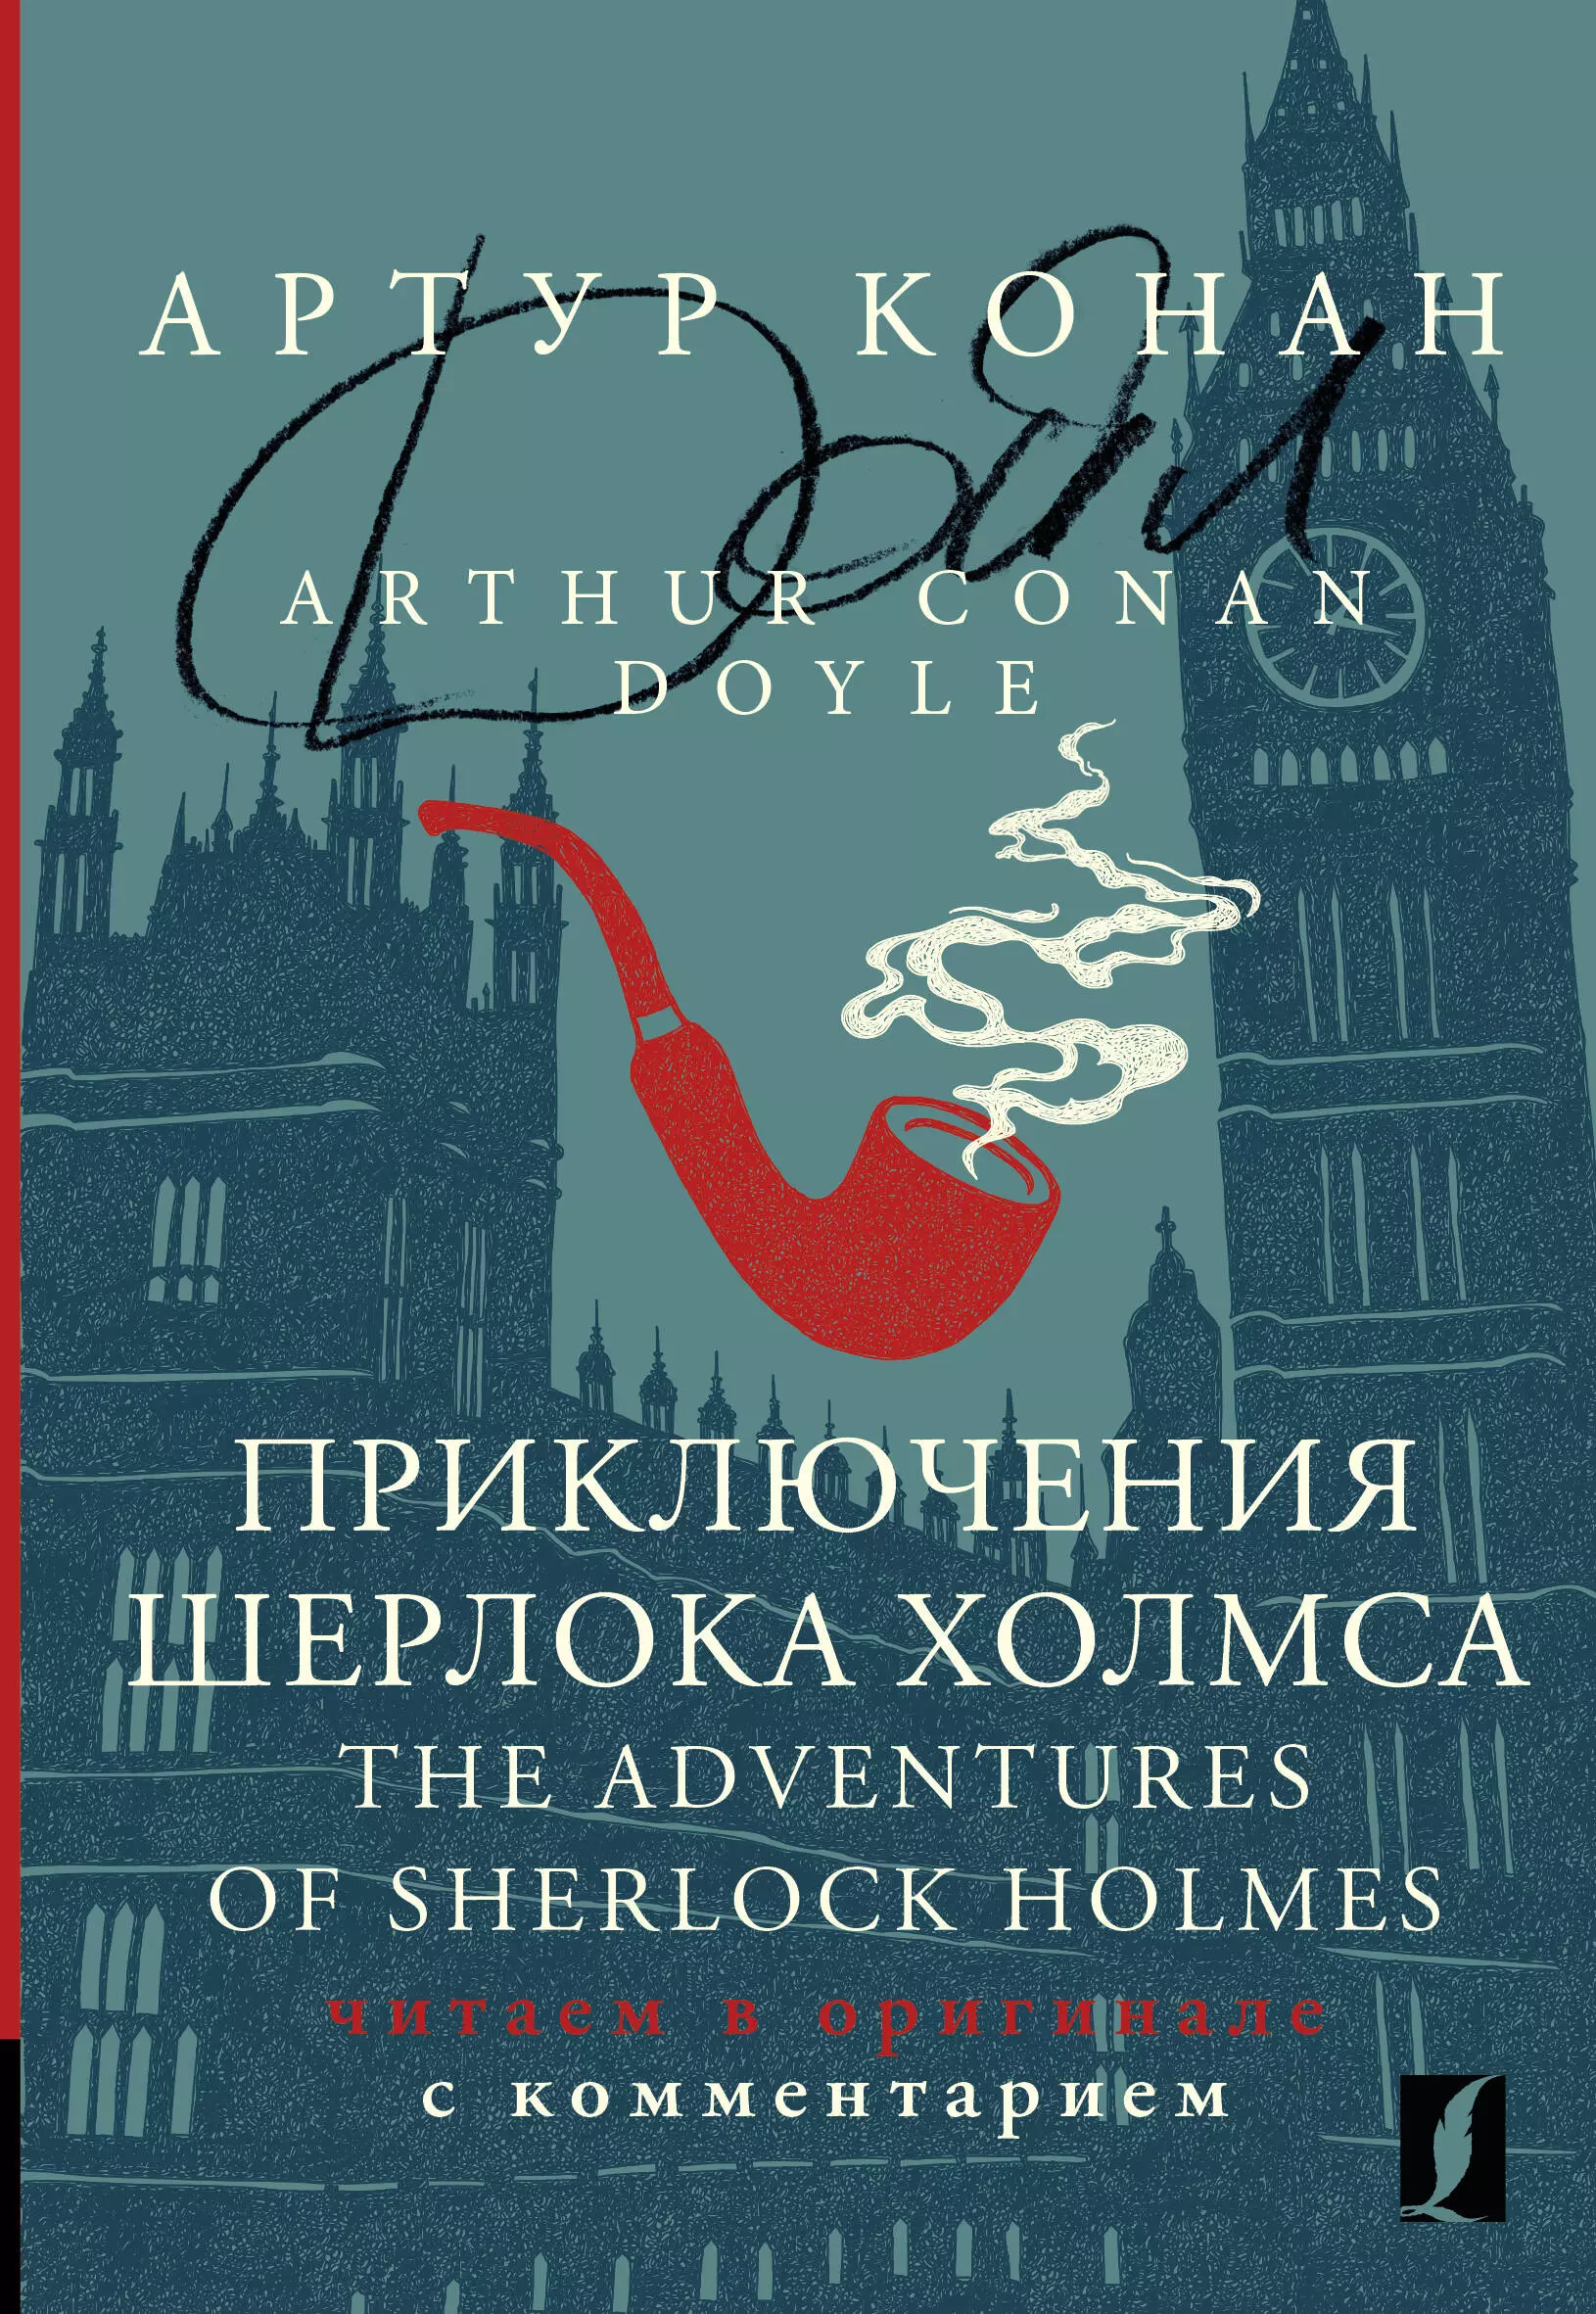 Дойл Артур Конан Приключения Шерлока Холмса / The Adventures of Sherlock Holmes: читаем в оригинале с комментарием дойл артур конан the adventures of sherlock holmes v приключения шерлока холмса v на англ яз